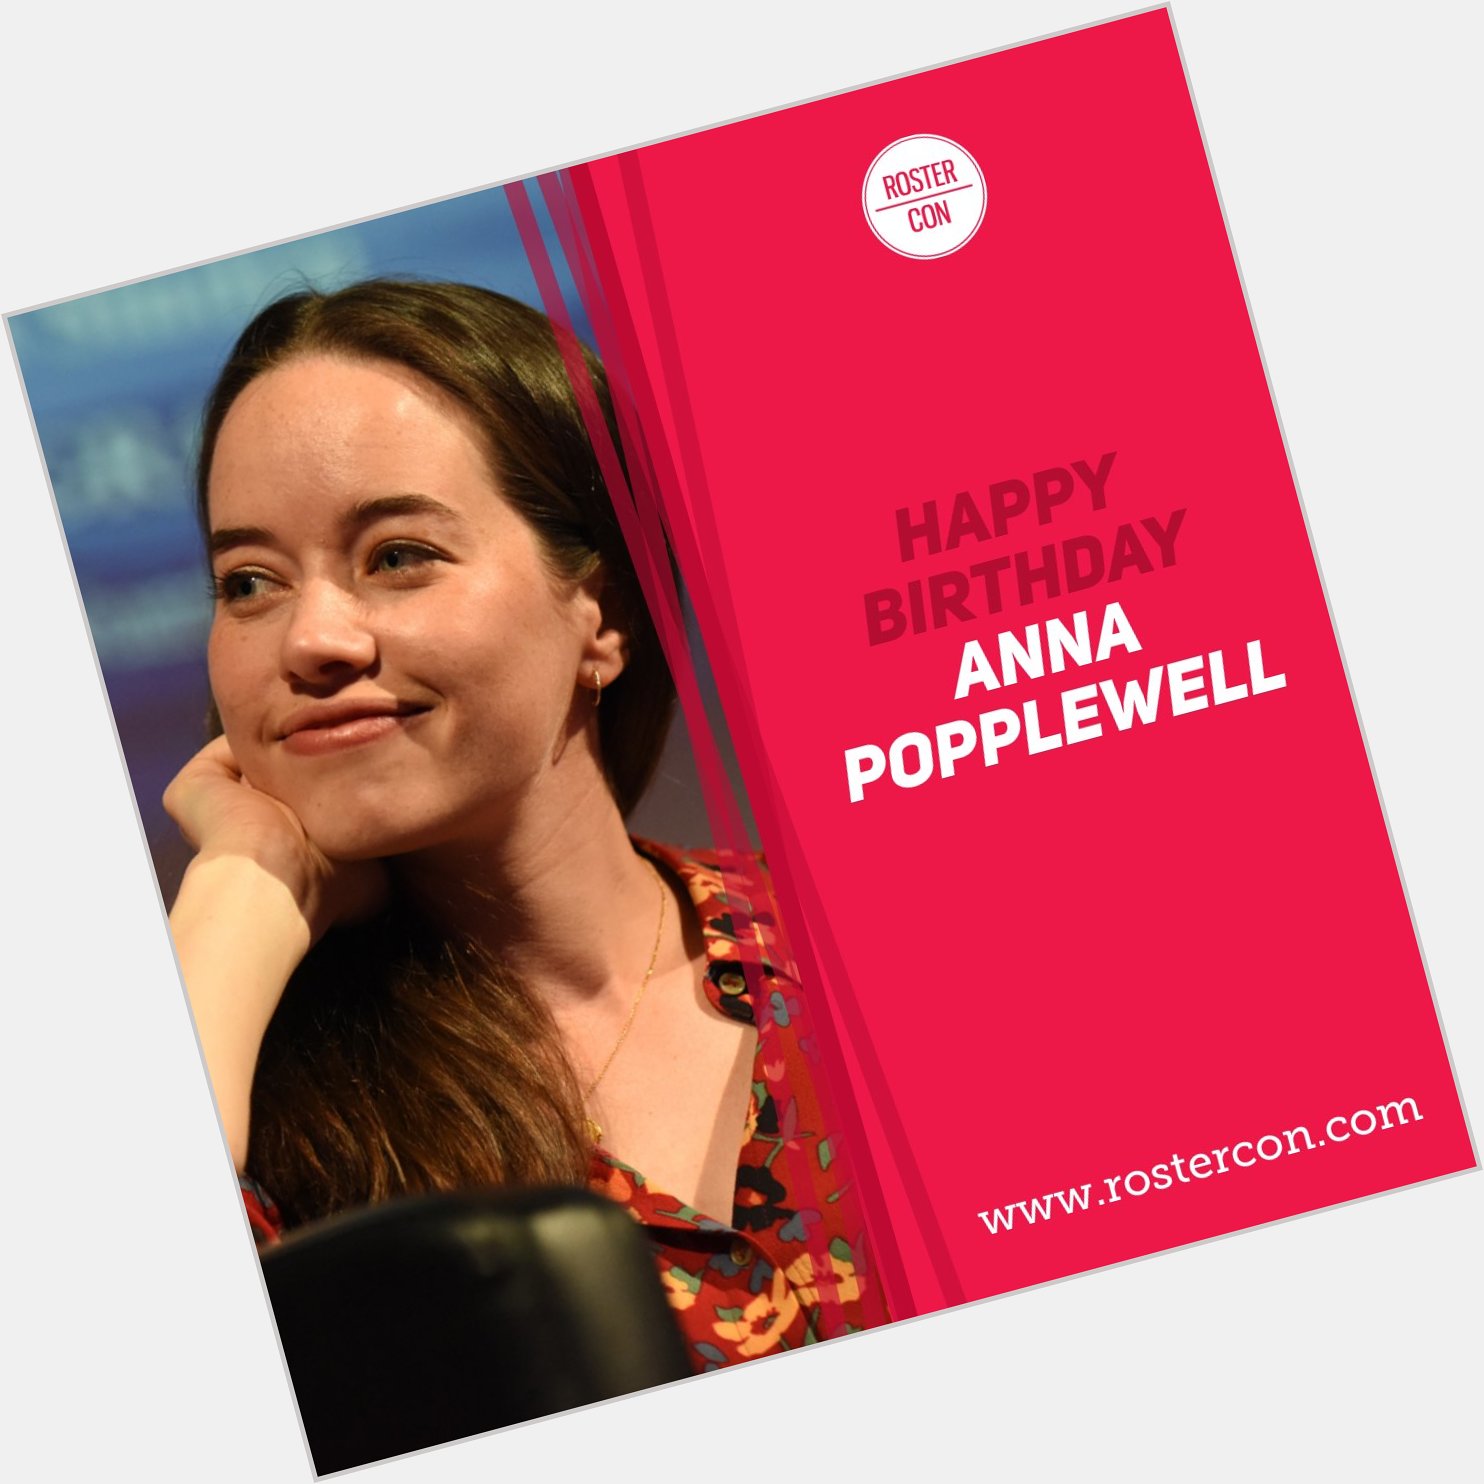  Happy Birthday Anna Popplewell  ! Souvenirs / Throwback :  